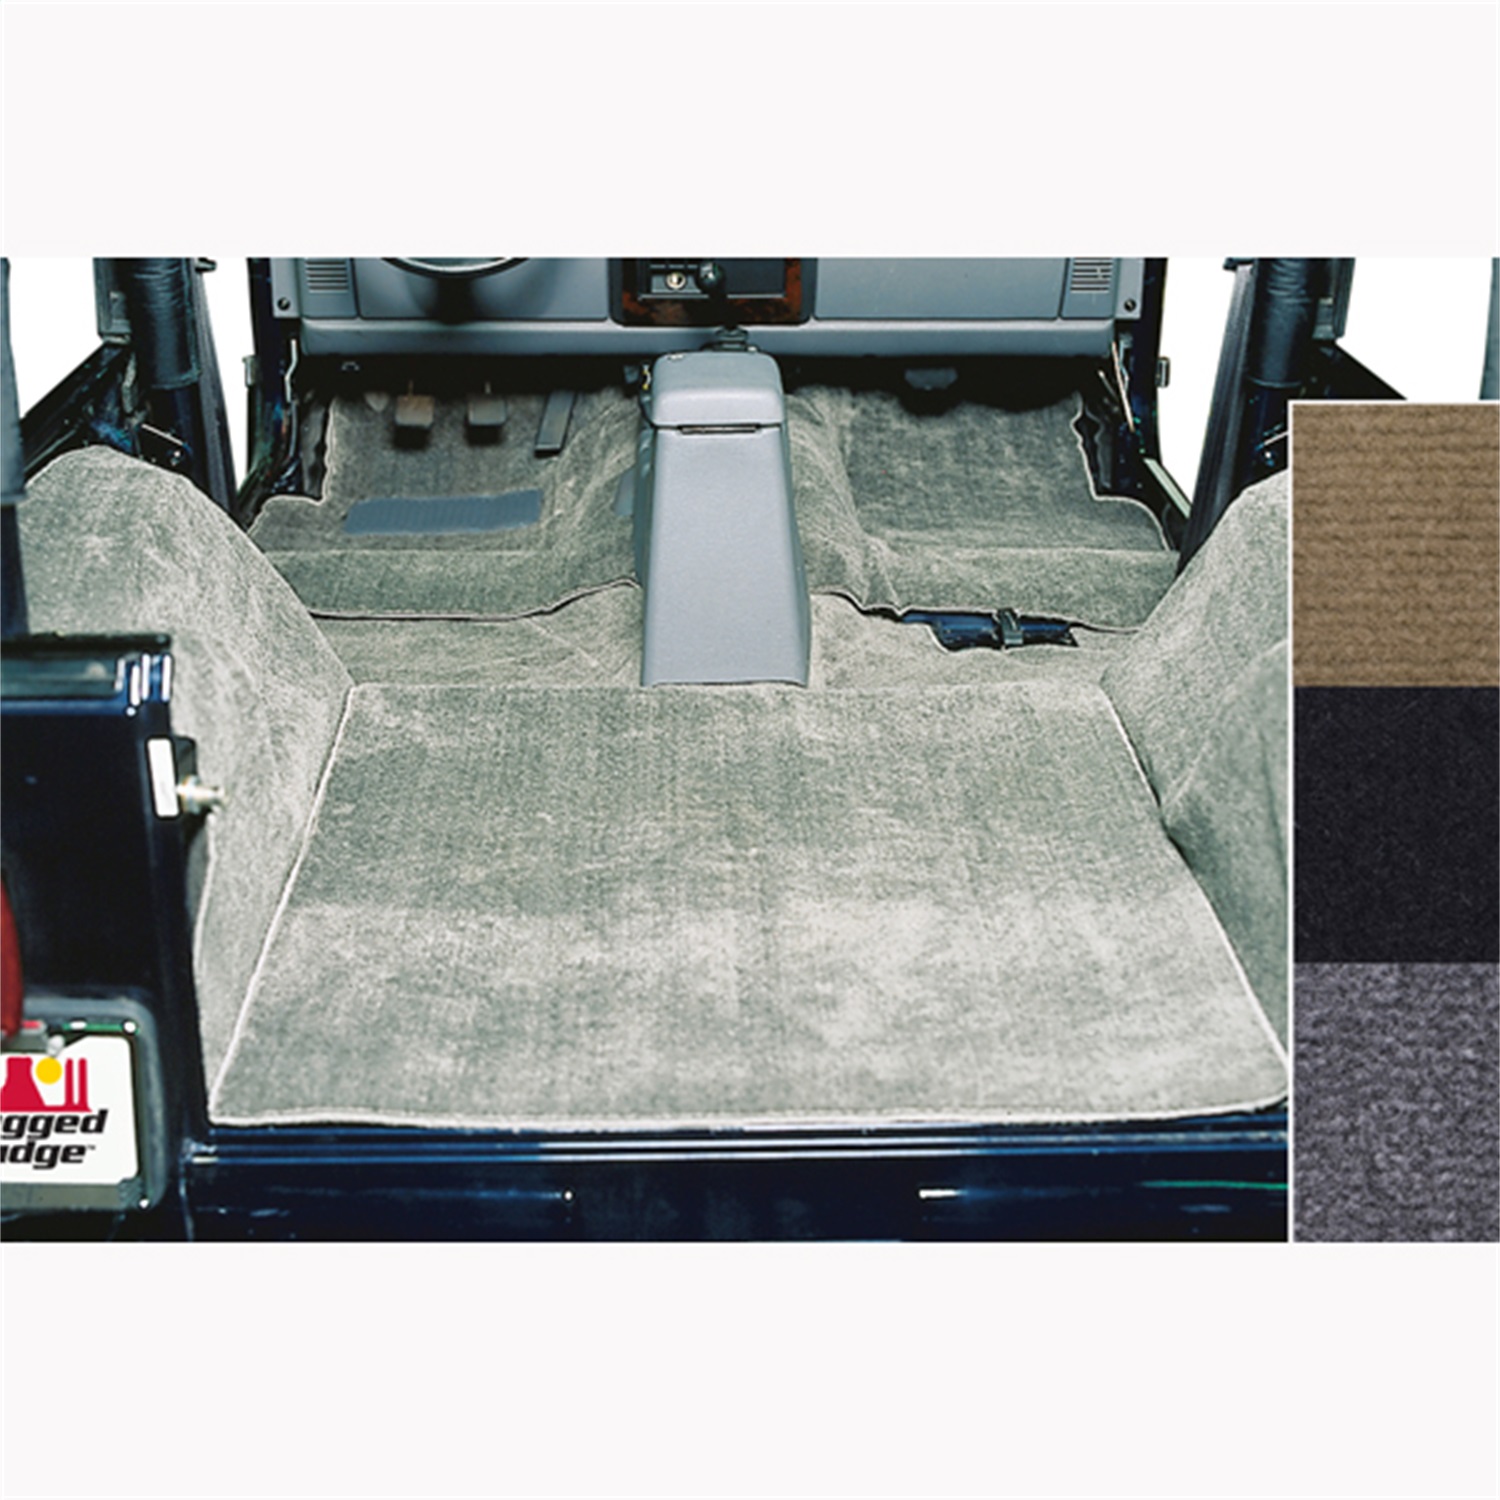 Rugged Ridge 13690.10 Deluxe Carpet Kit Fits 76-95 CJ7 Wrangler (YJ)